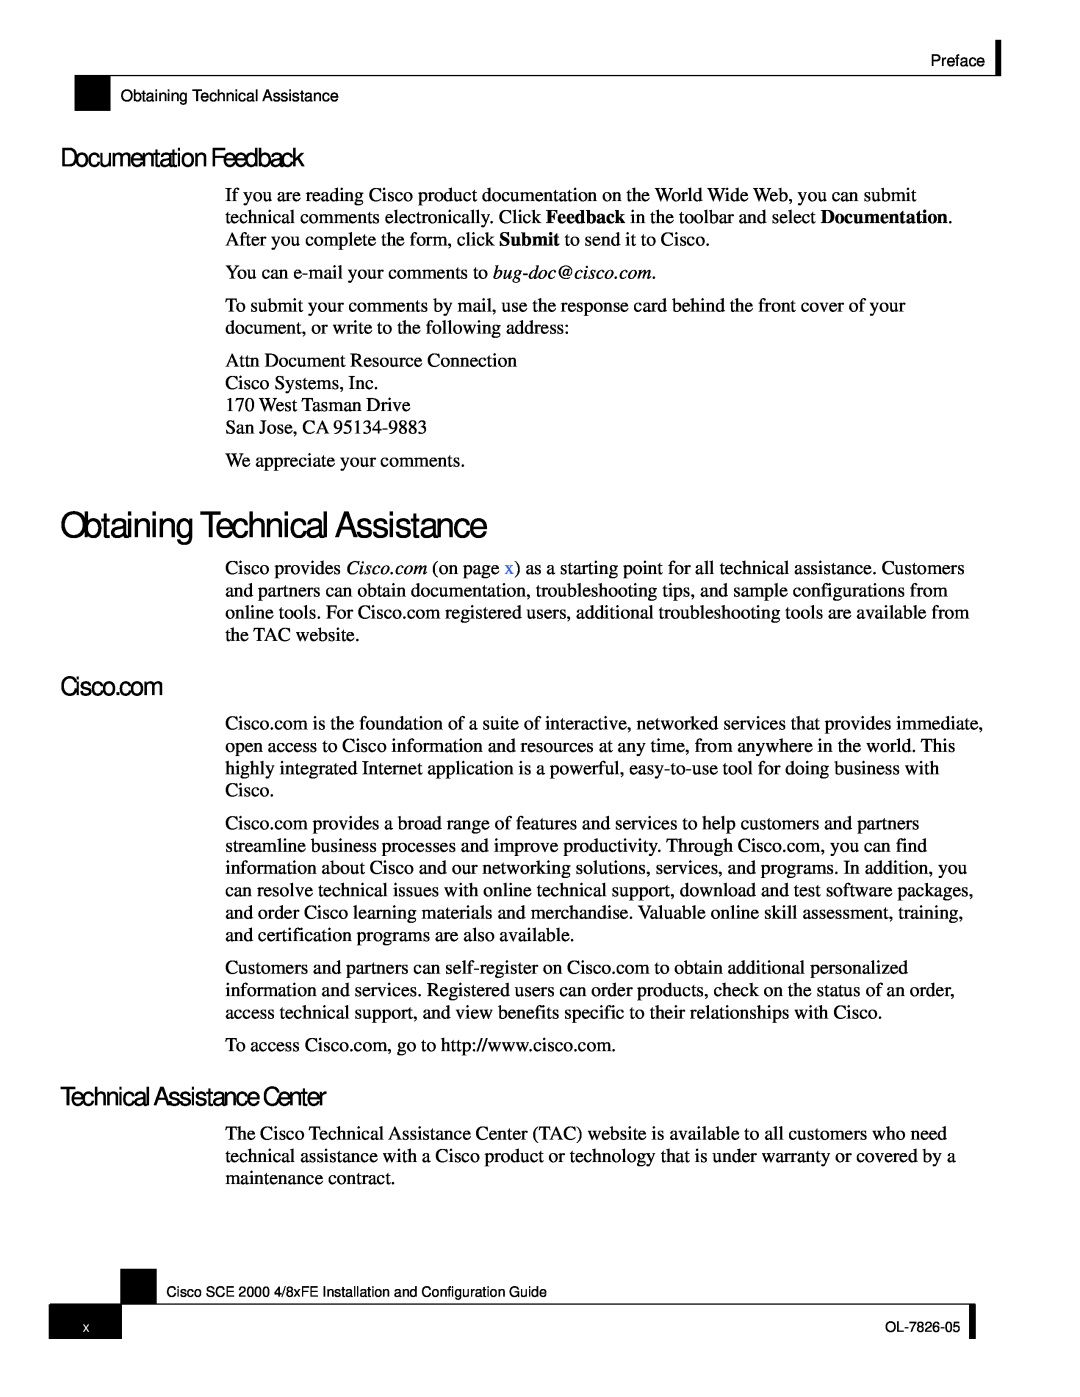 Cisco Systems SCE 2000 4/8xFE manual Obtaining Technical Assistance, Documentation Feedback, Cisco.com 